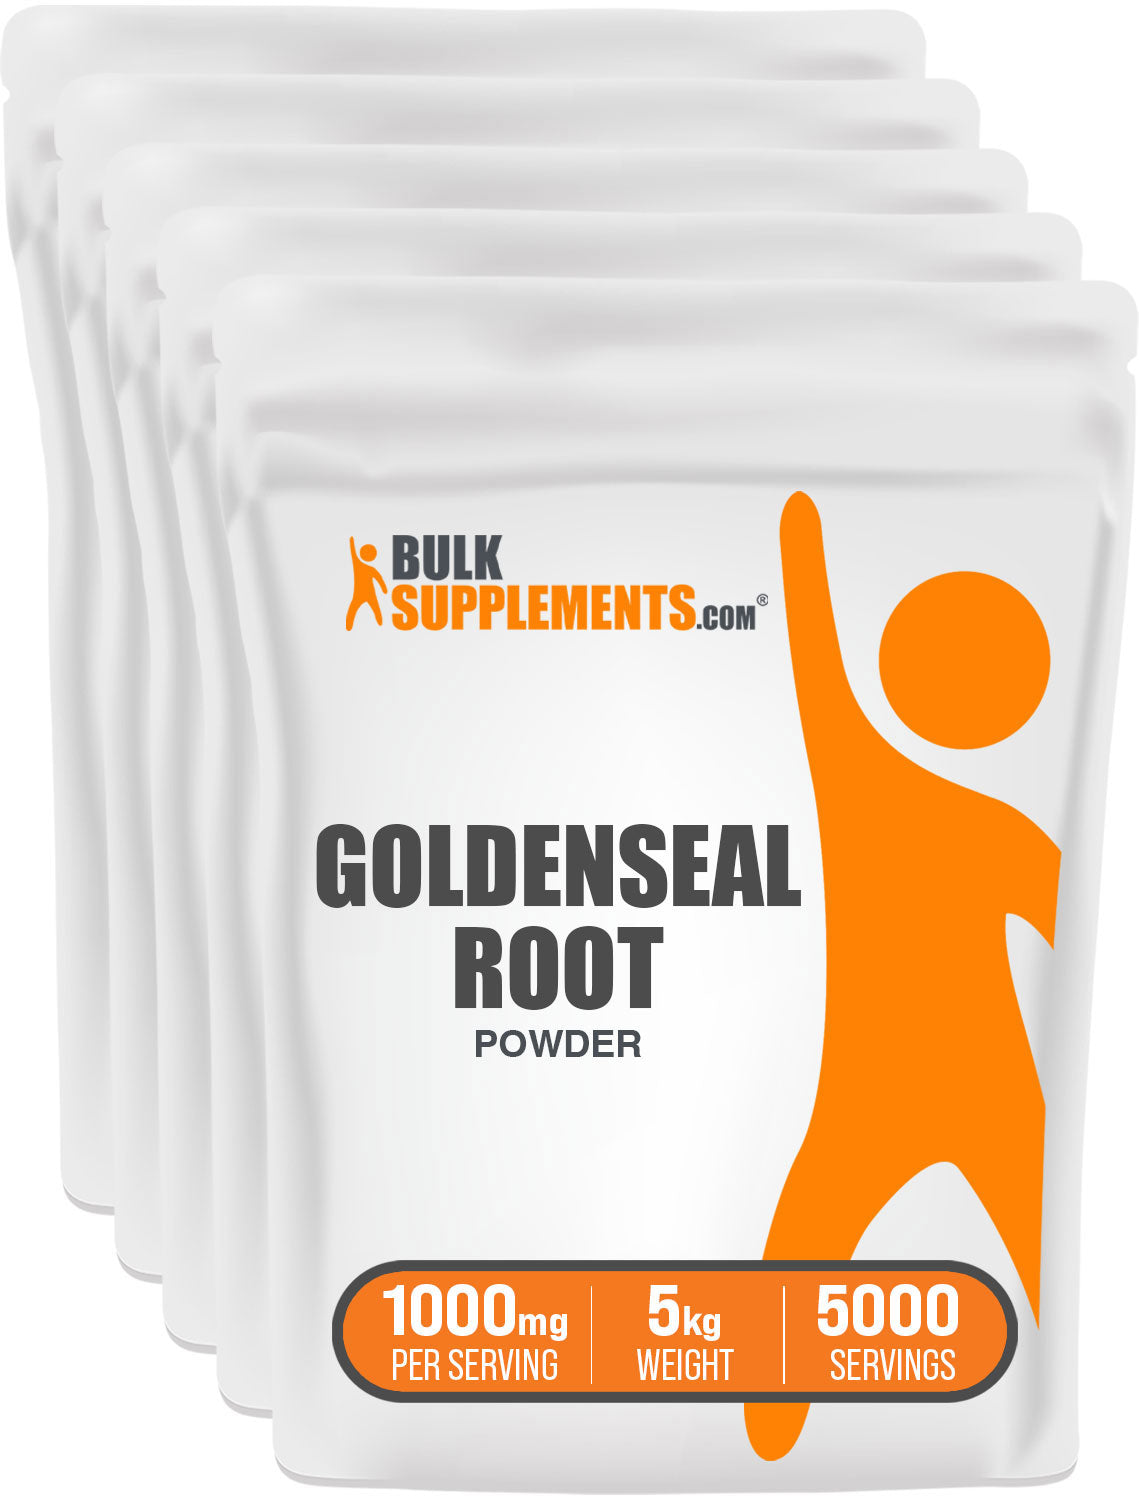 Goldenseal root powder bag image 5kg